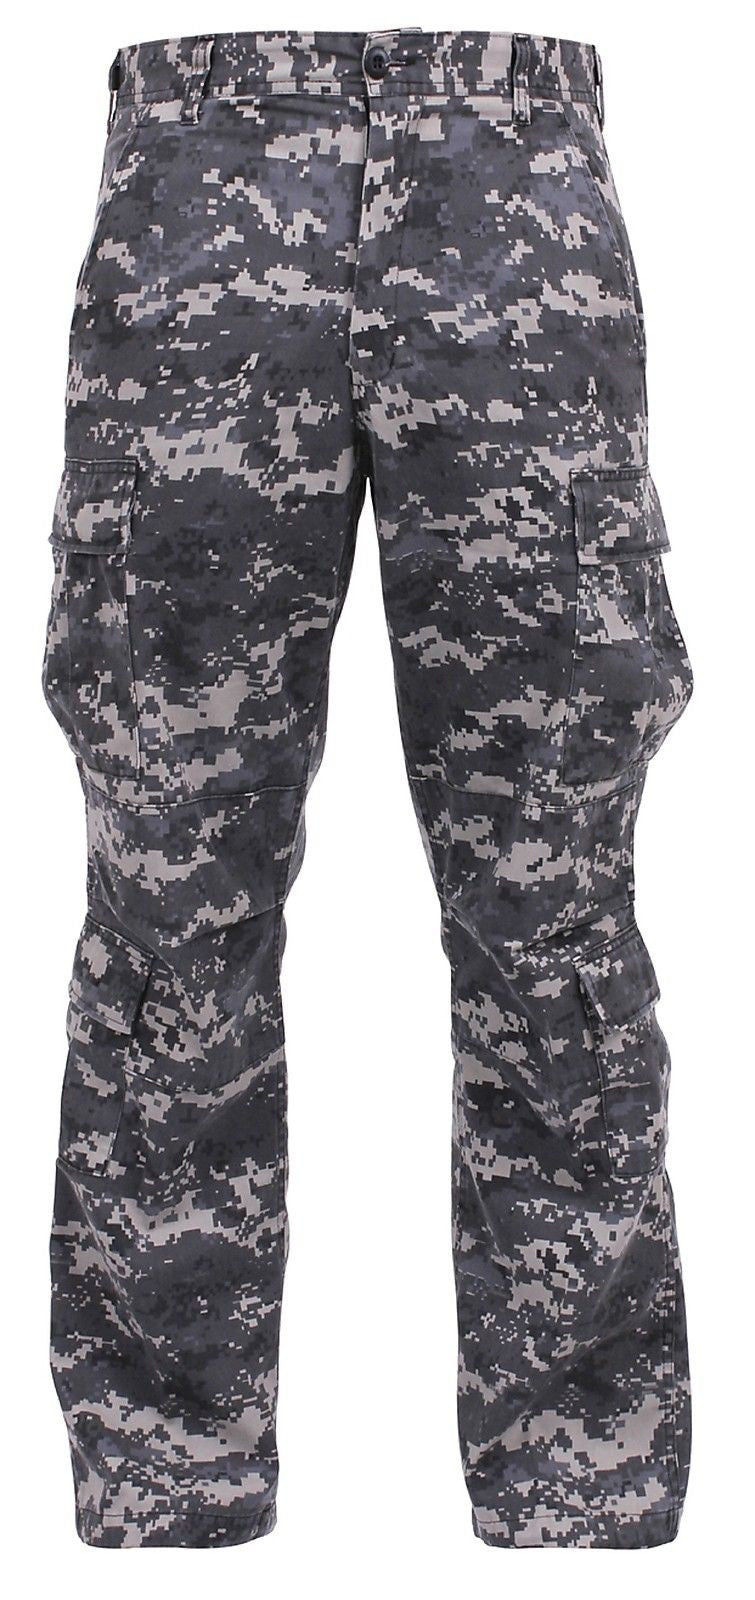 Men's Subdued Urban Digital Camouflage Fatigue Cargo Pants